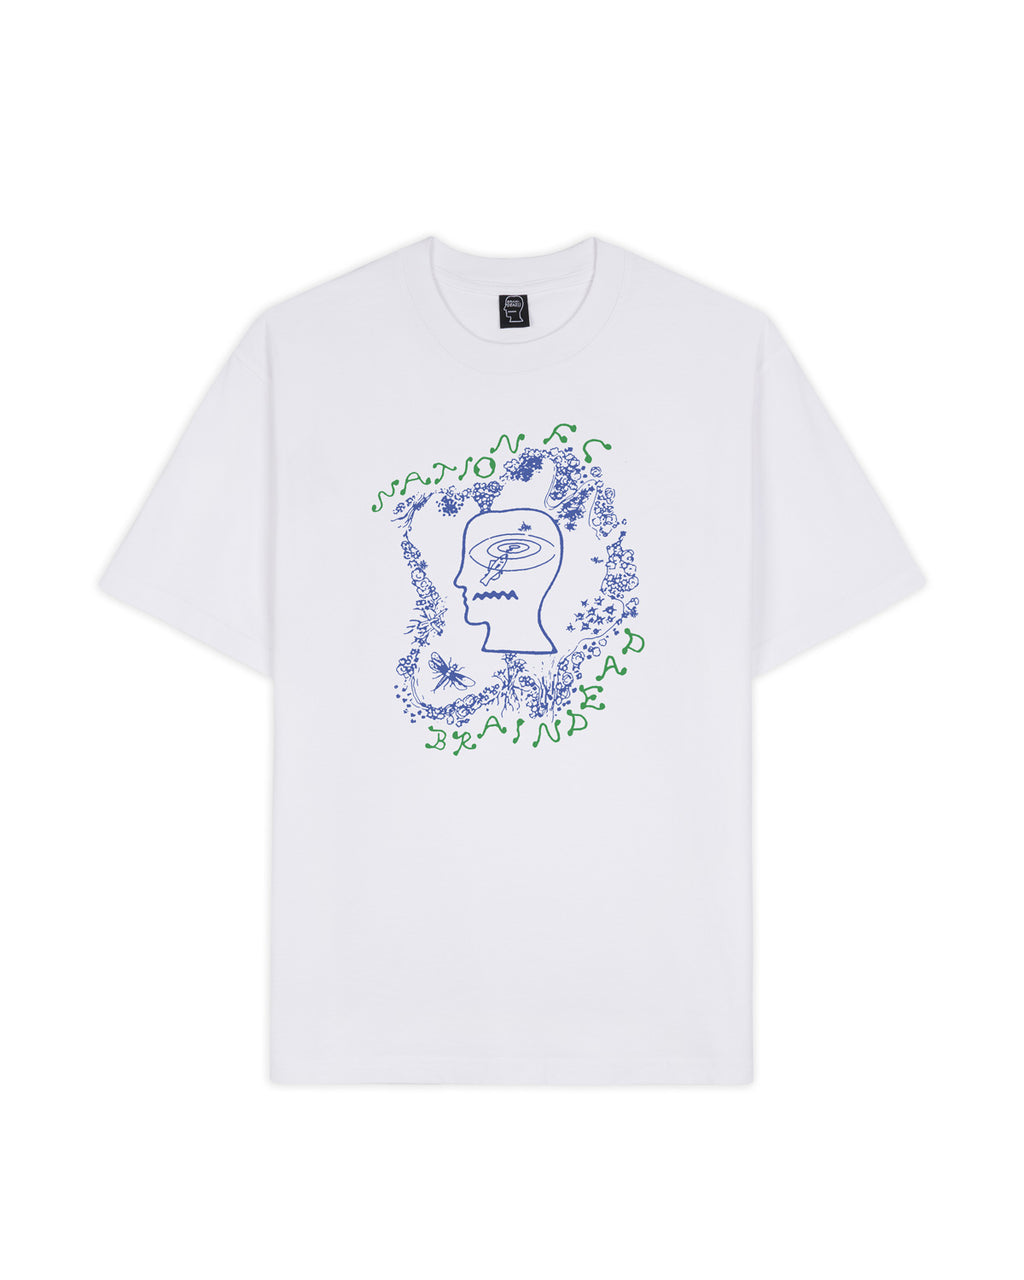 Brain Dead x Nation Fishing Co T-shirt - White